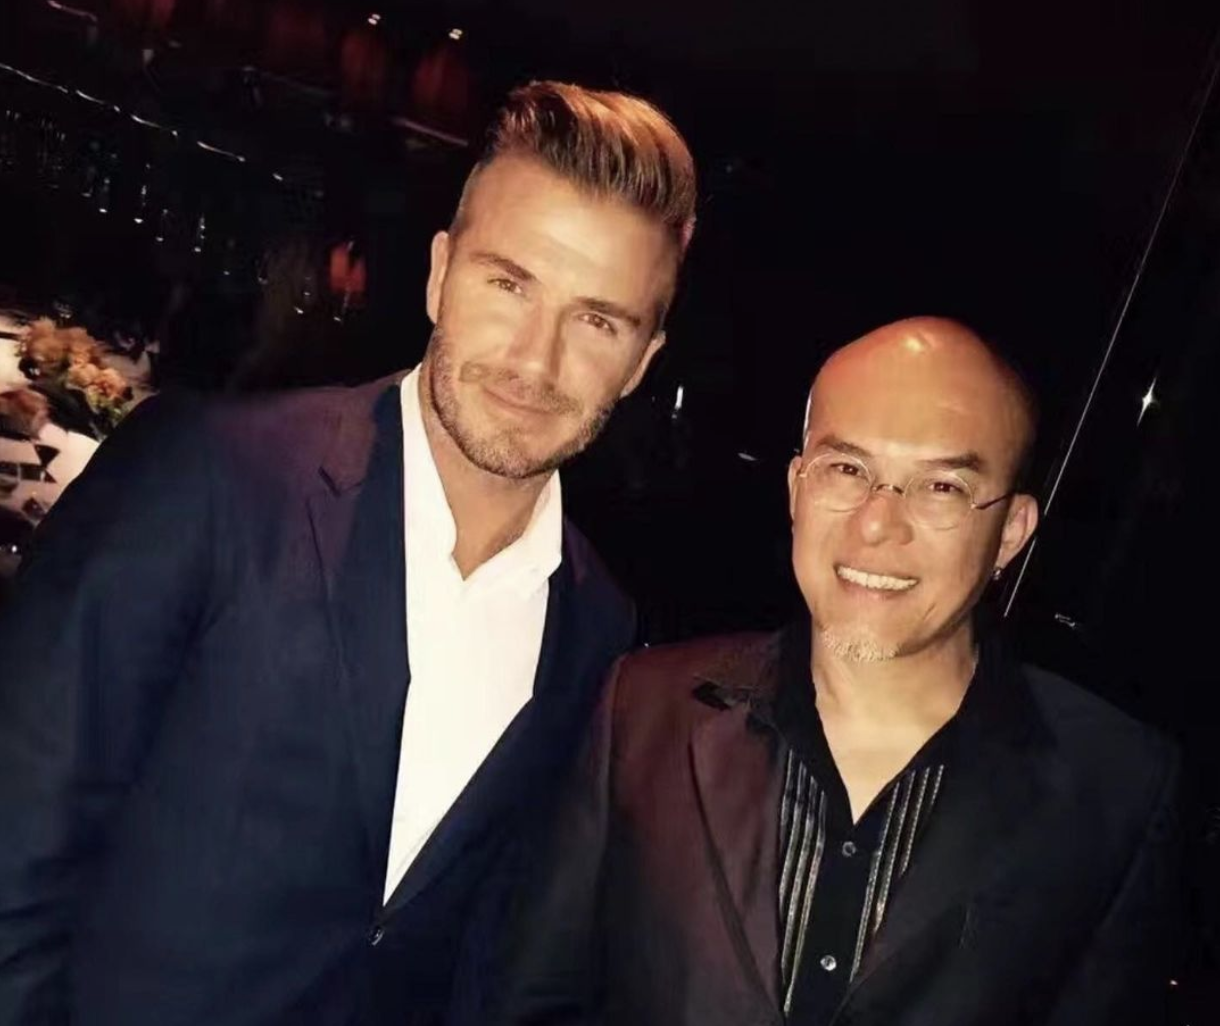 Tattoo artist and organiser Gabe Shum with footballer David Beckham. – Instagram pic